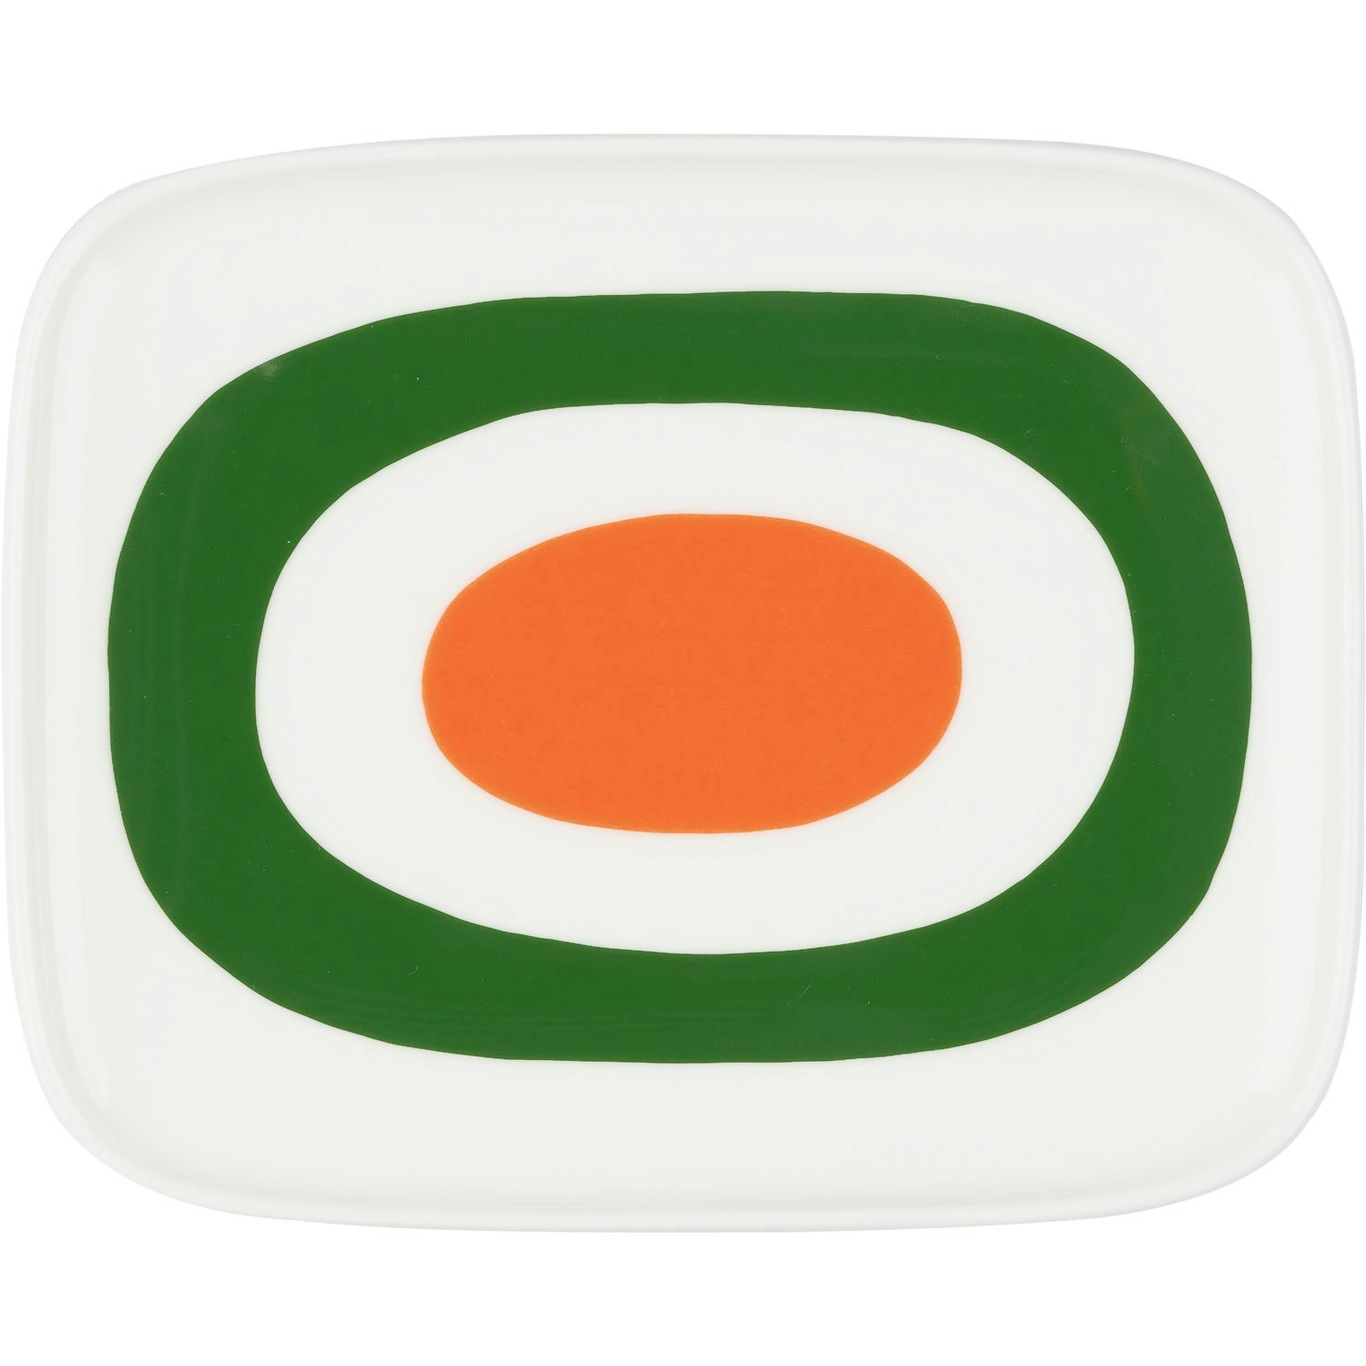 Melooni Bord 12x15 cm, Wit / Groen / Oranje